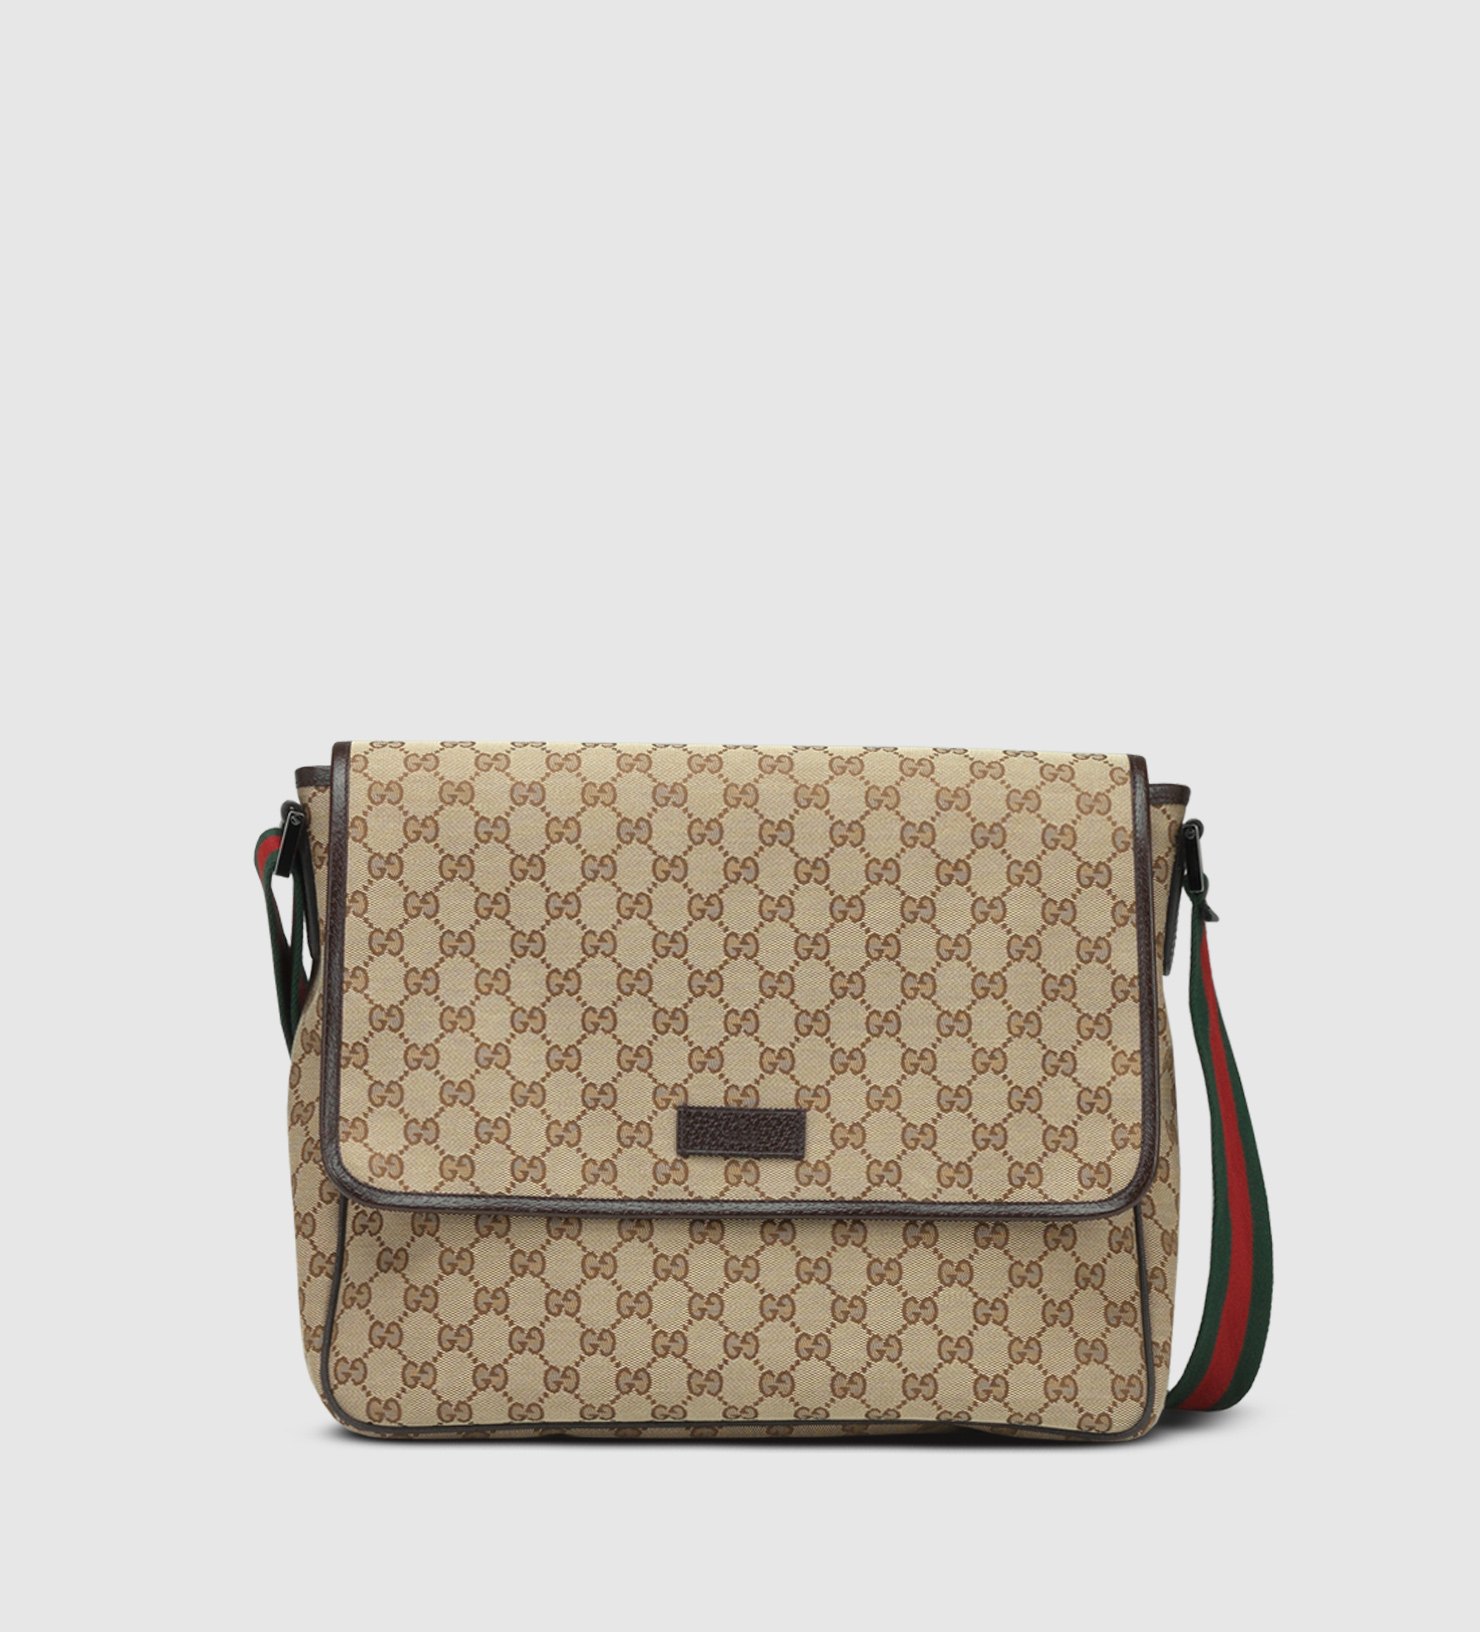 Gucci Original Gg Canvas Messenger Bag in Natural for Men - Lyst